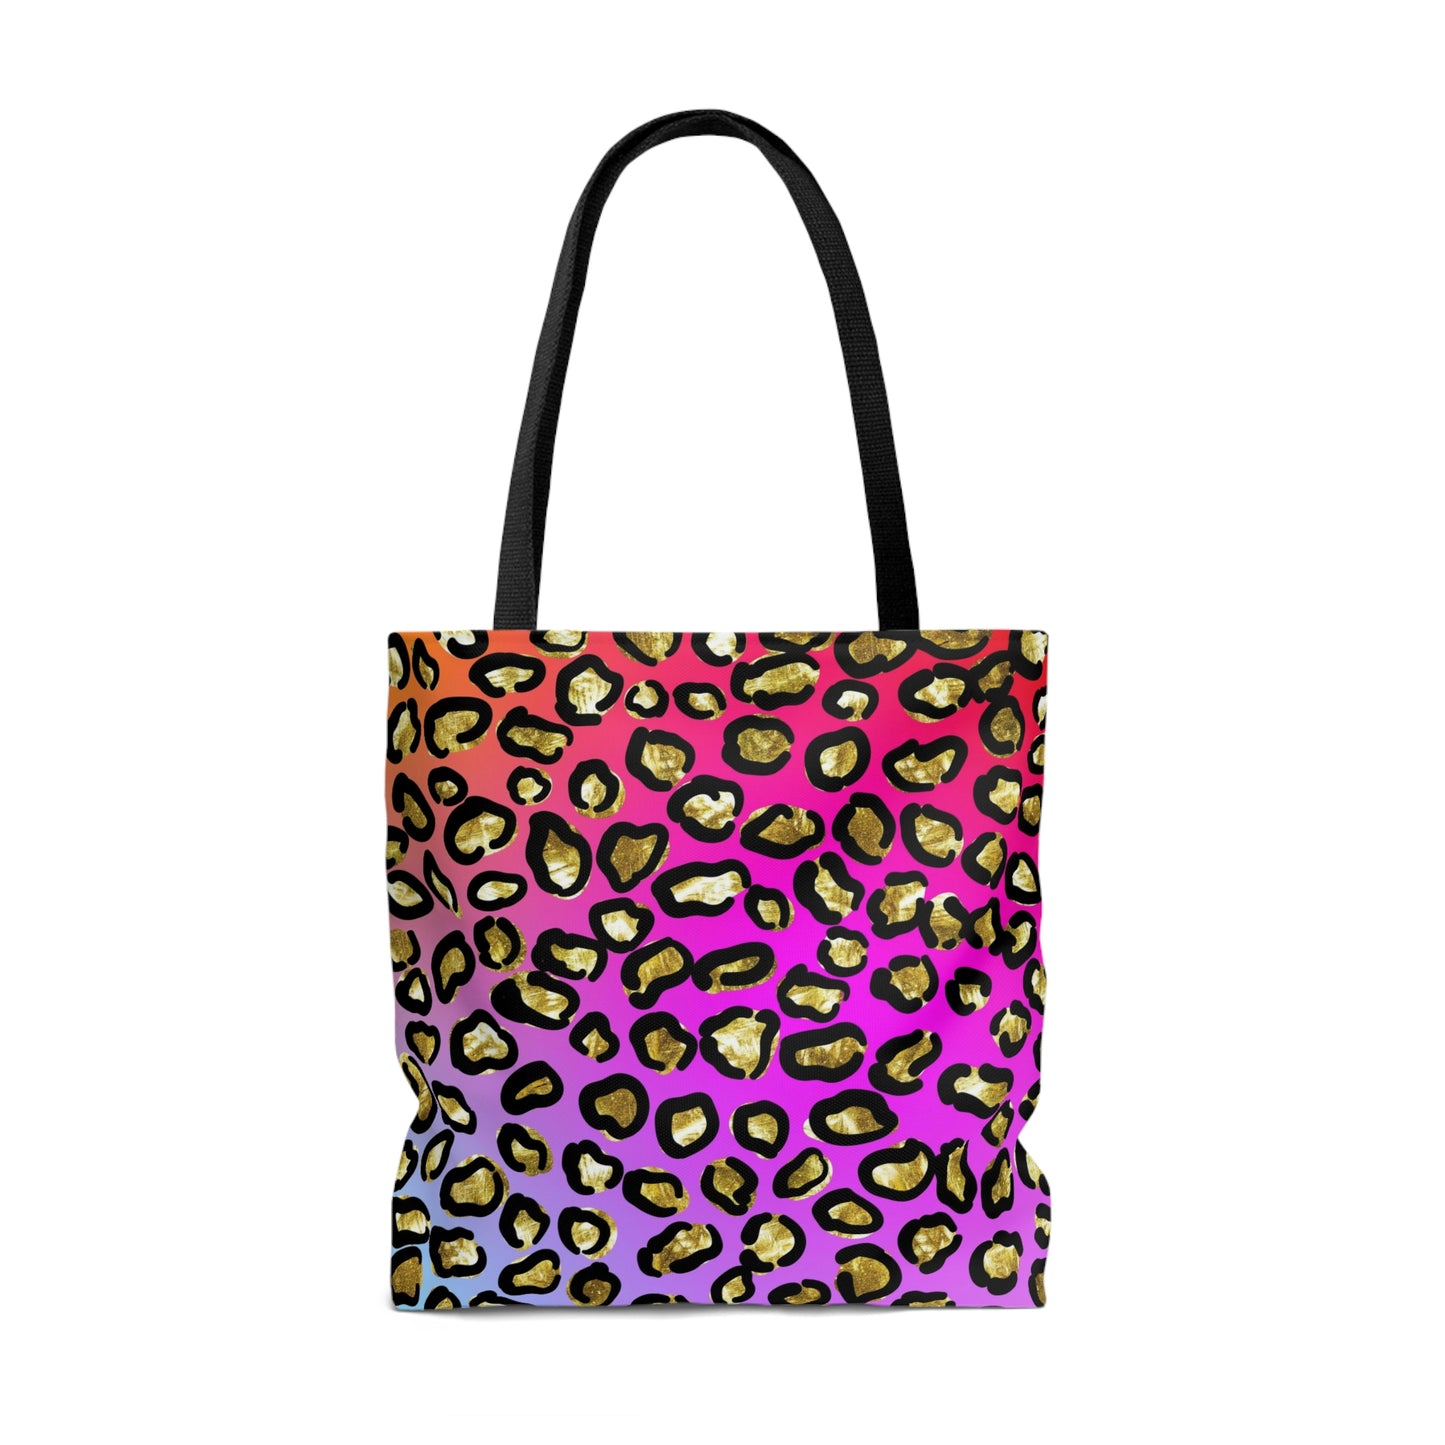 Leopard Print Canvas Tote Bag, Cute Rainbow Leopard, Summer Weekend, Beach, Large Tote Bag